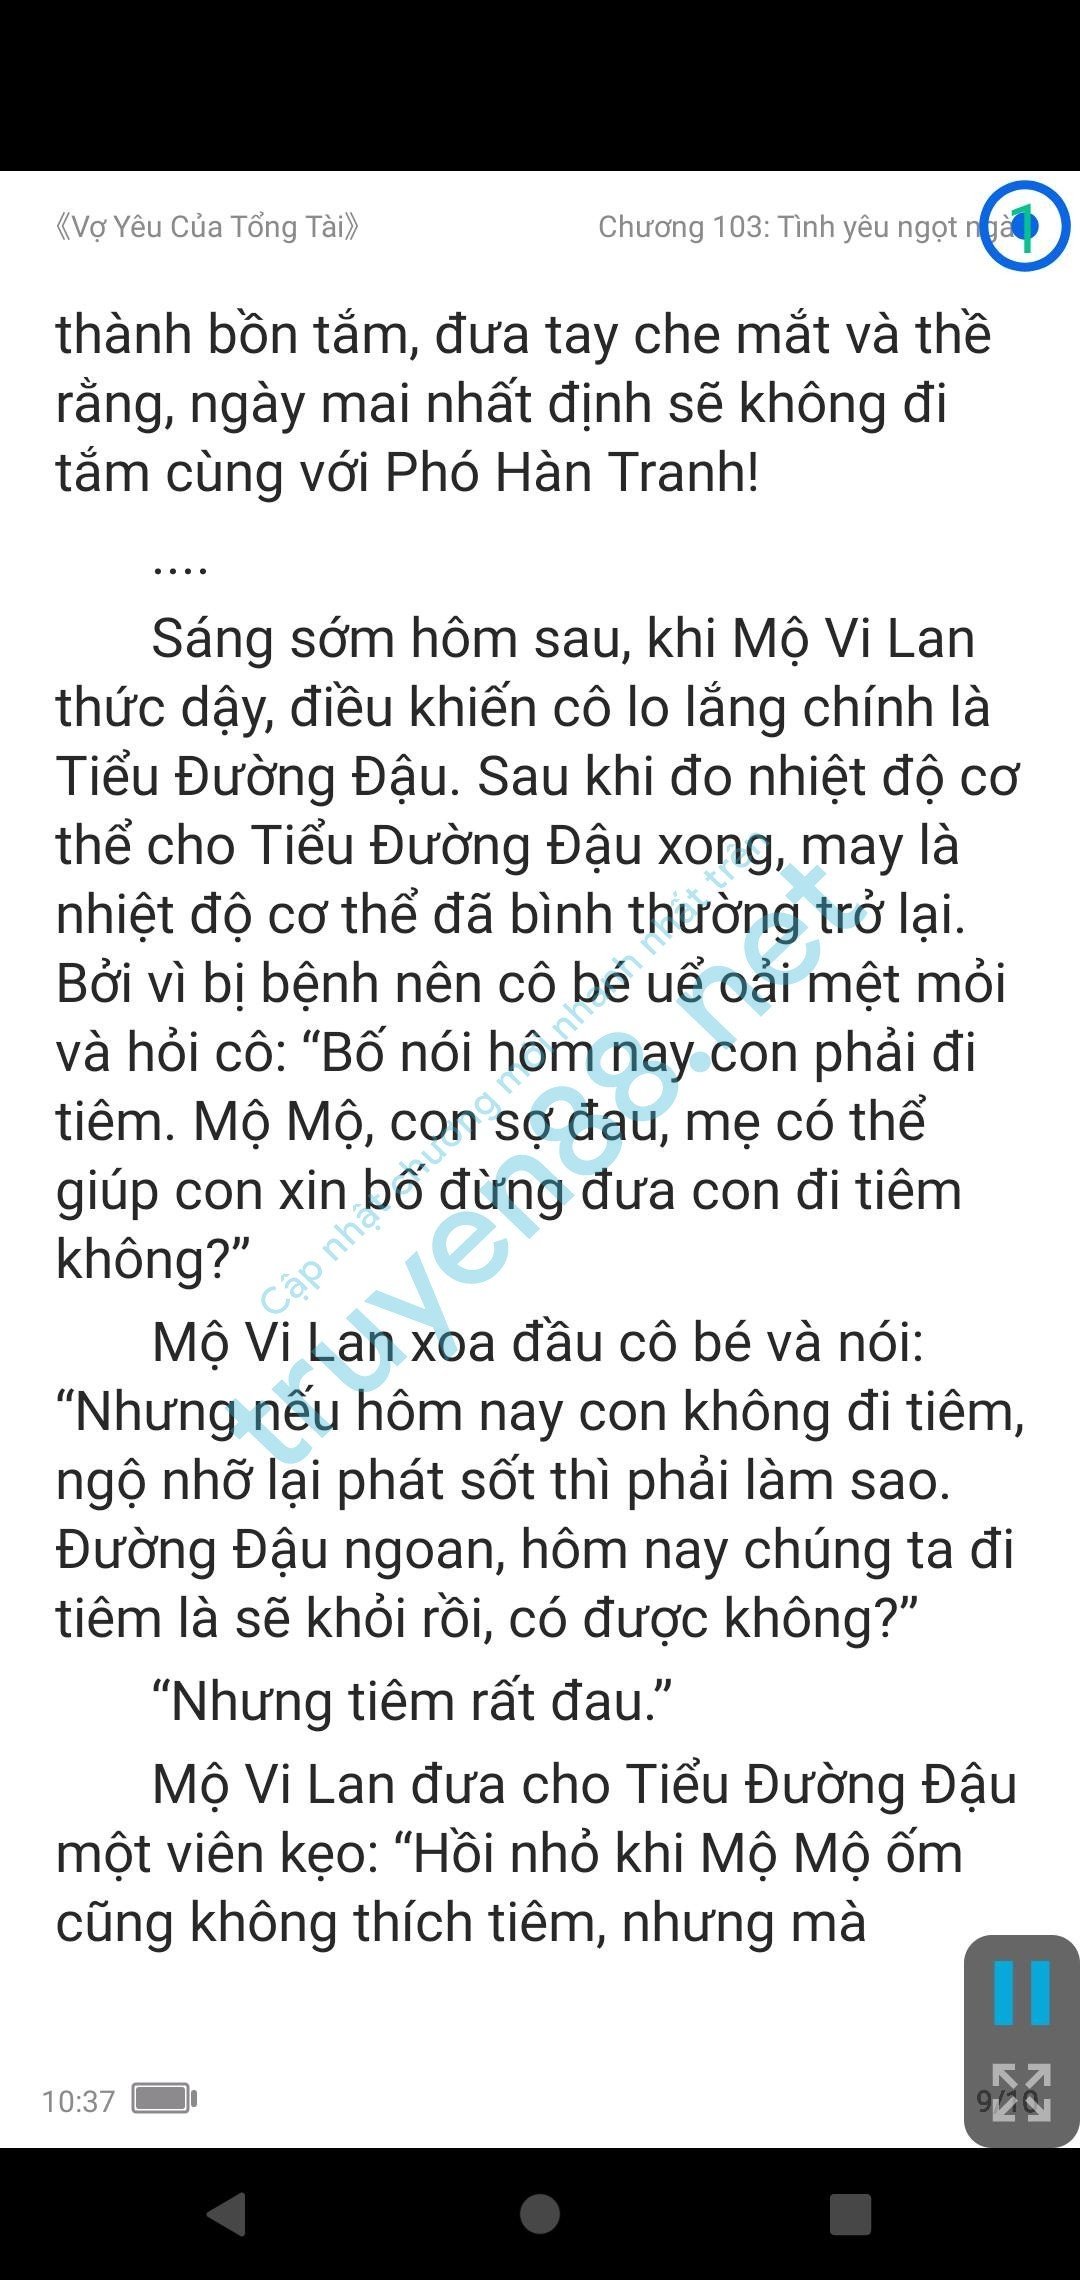 vo-yeu-cua-tong-tai-mo-vi-lan--pho-han-tranh-103-1